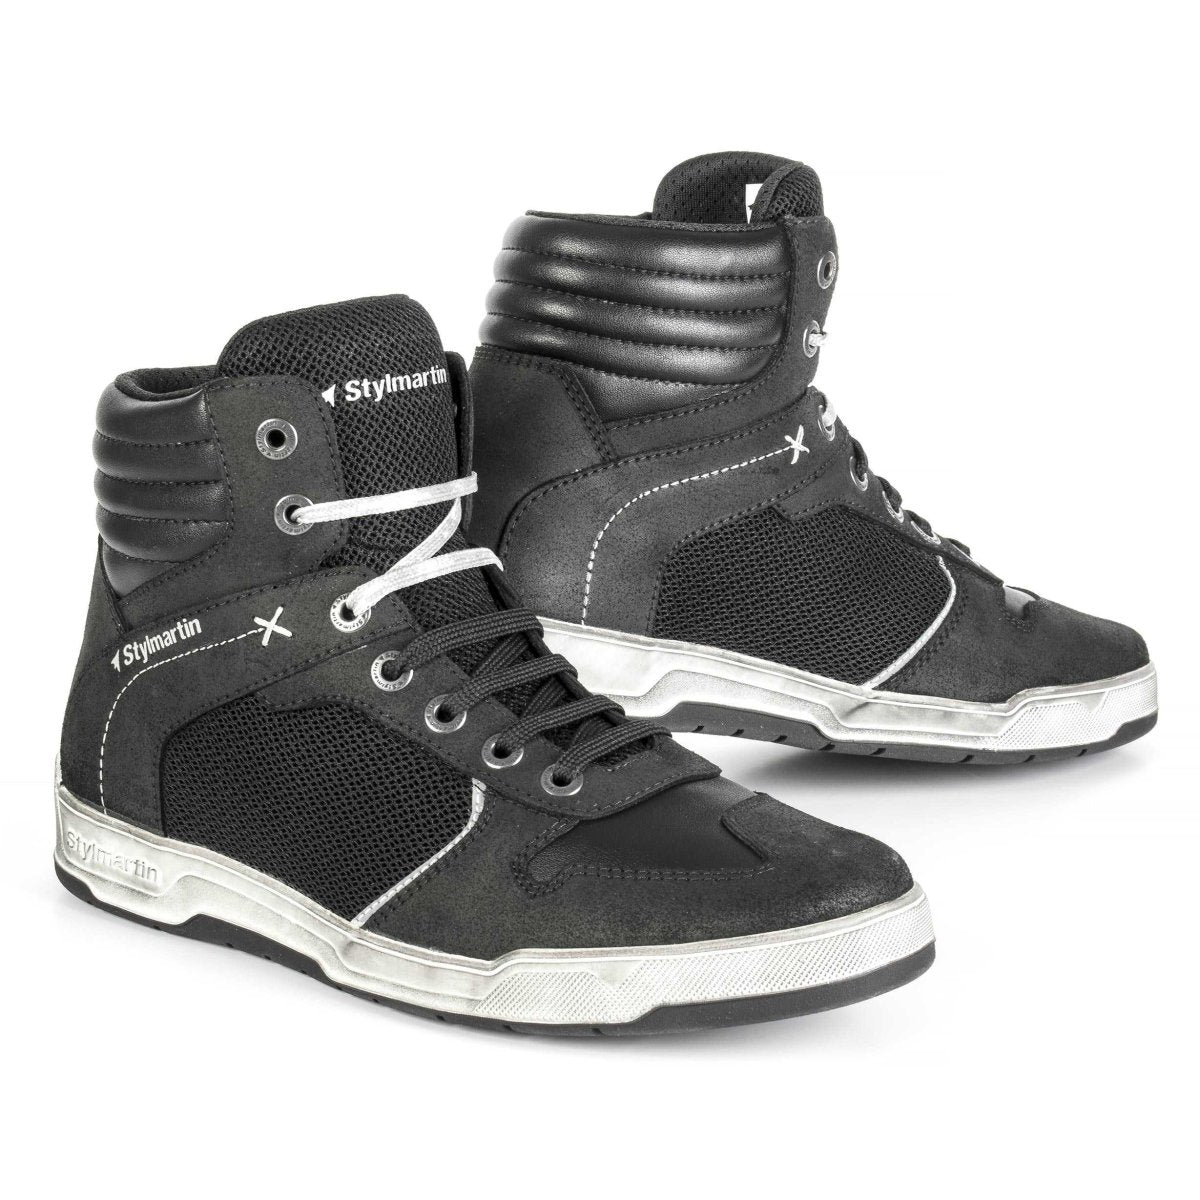 Stylmartin Atom Black Sneaker 